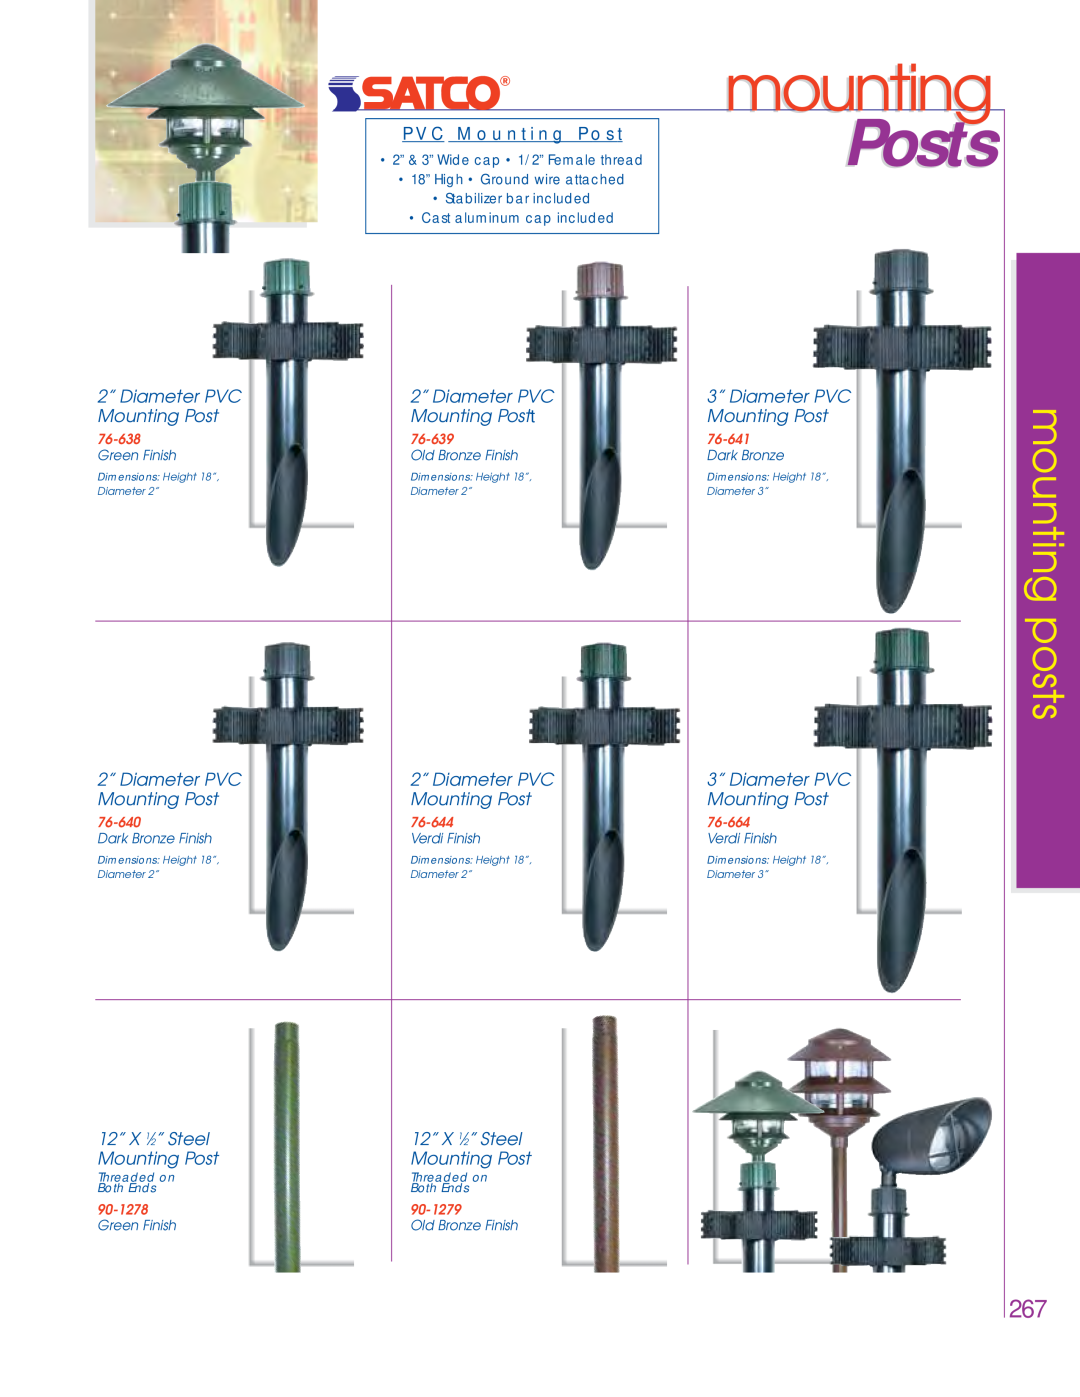 Satco Products 76-280, 76-693 Posts, mounting posts, P V CM o u n t i n g P o s t, 2” Diameter PVC, Mounting Post 